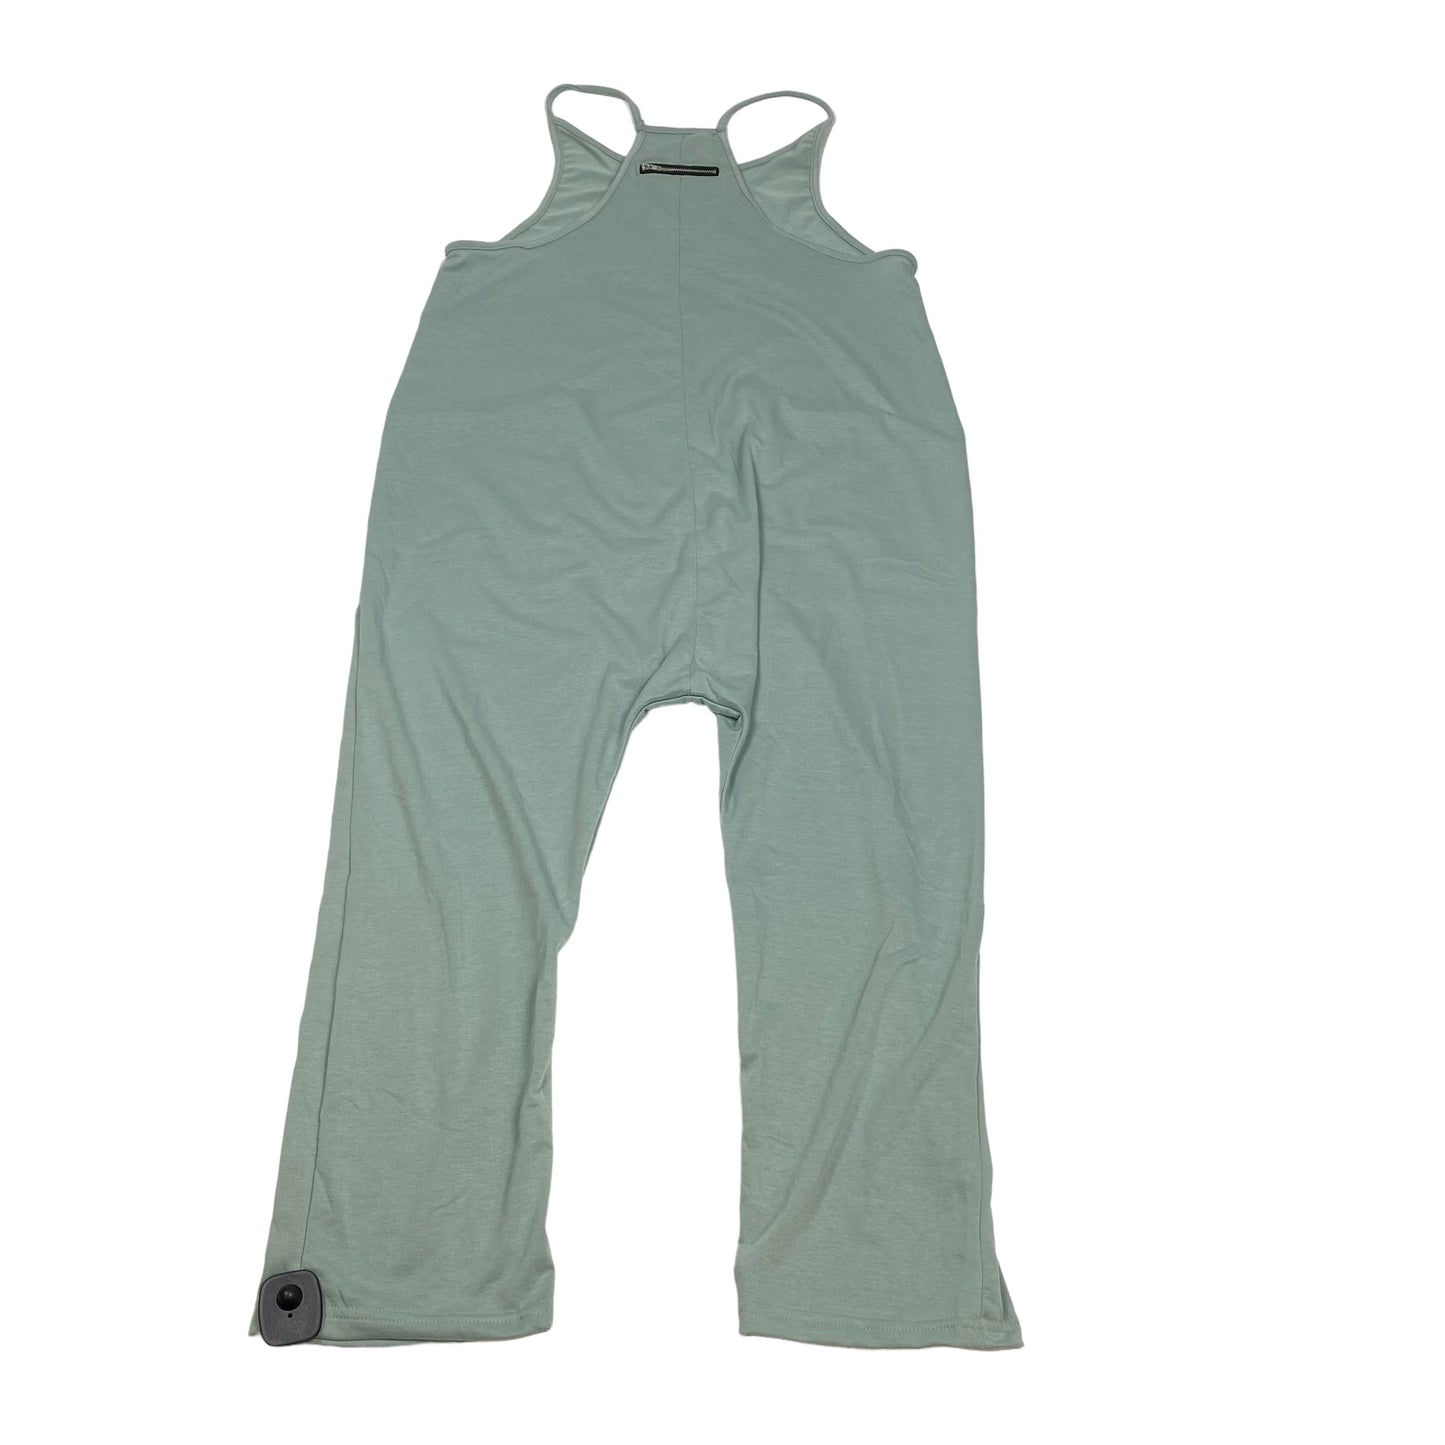 Green Jumpsuit Clothes Mentor, Size M